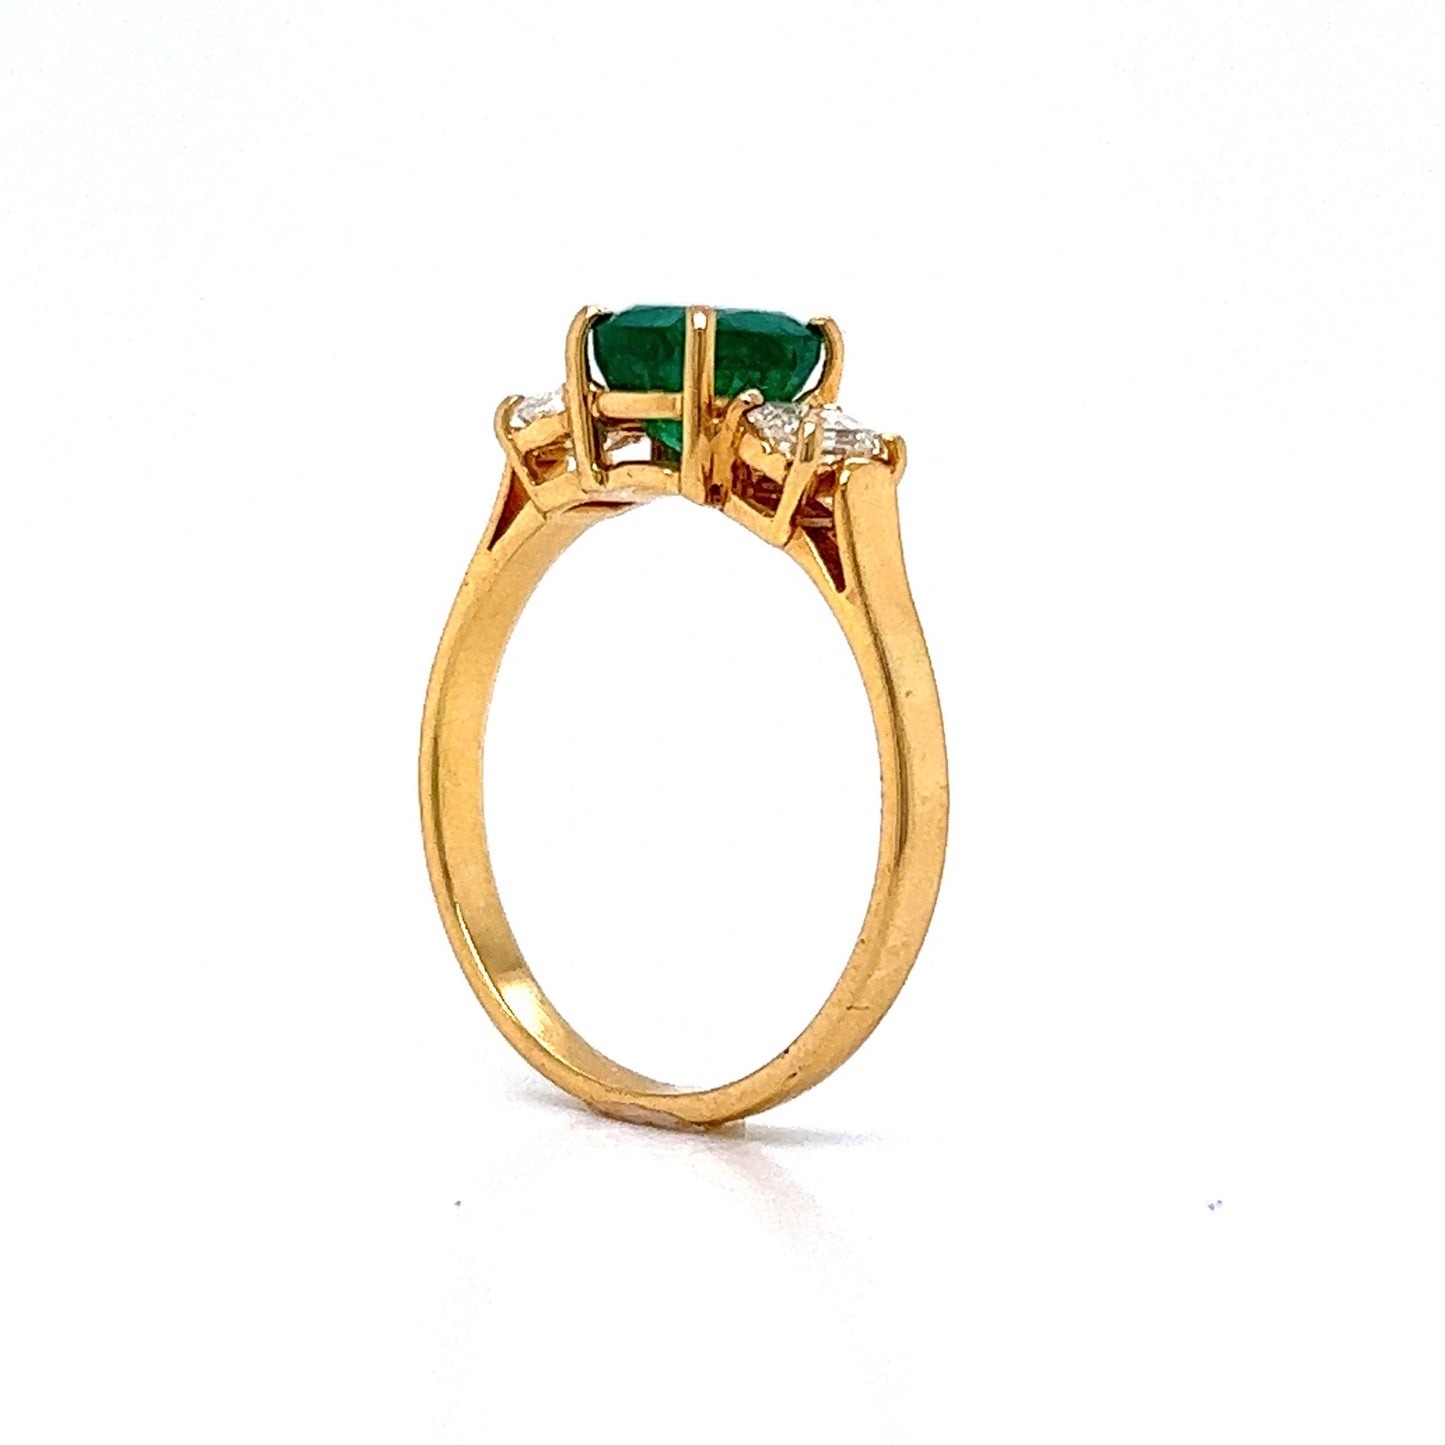 Cushion Cut Emerald & Diamond Ring in 18k Yellow Gold